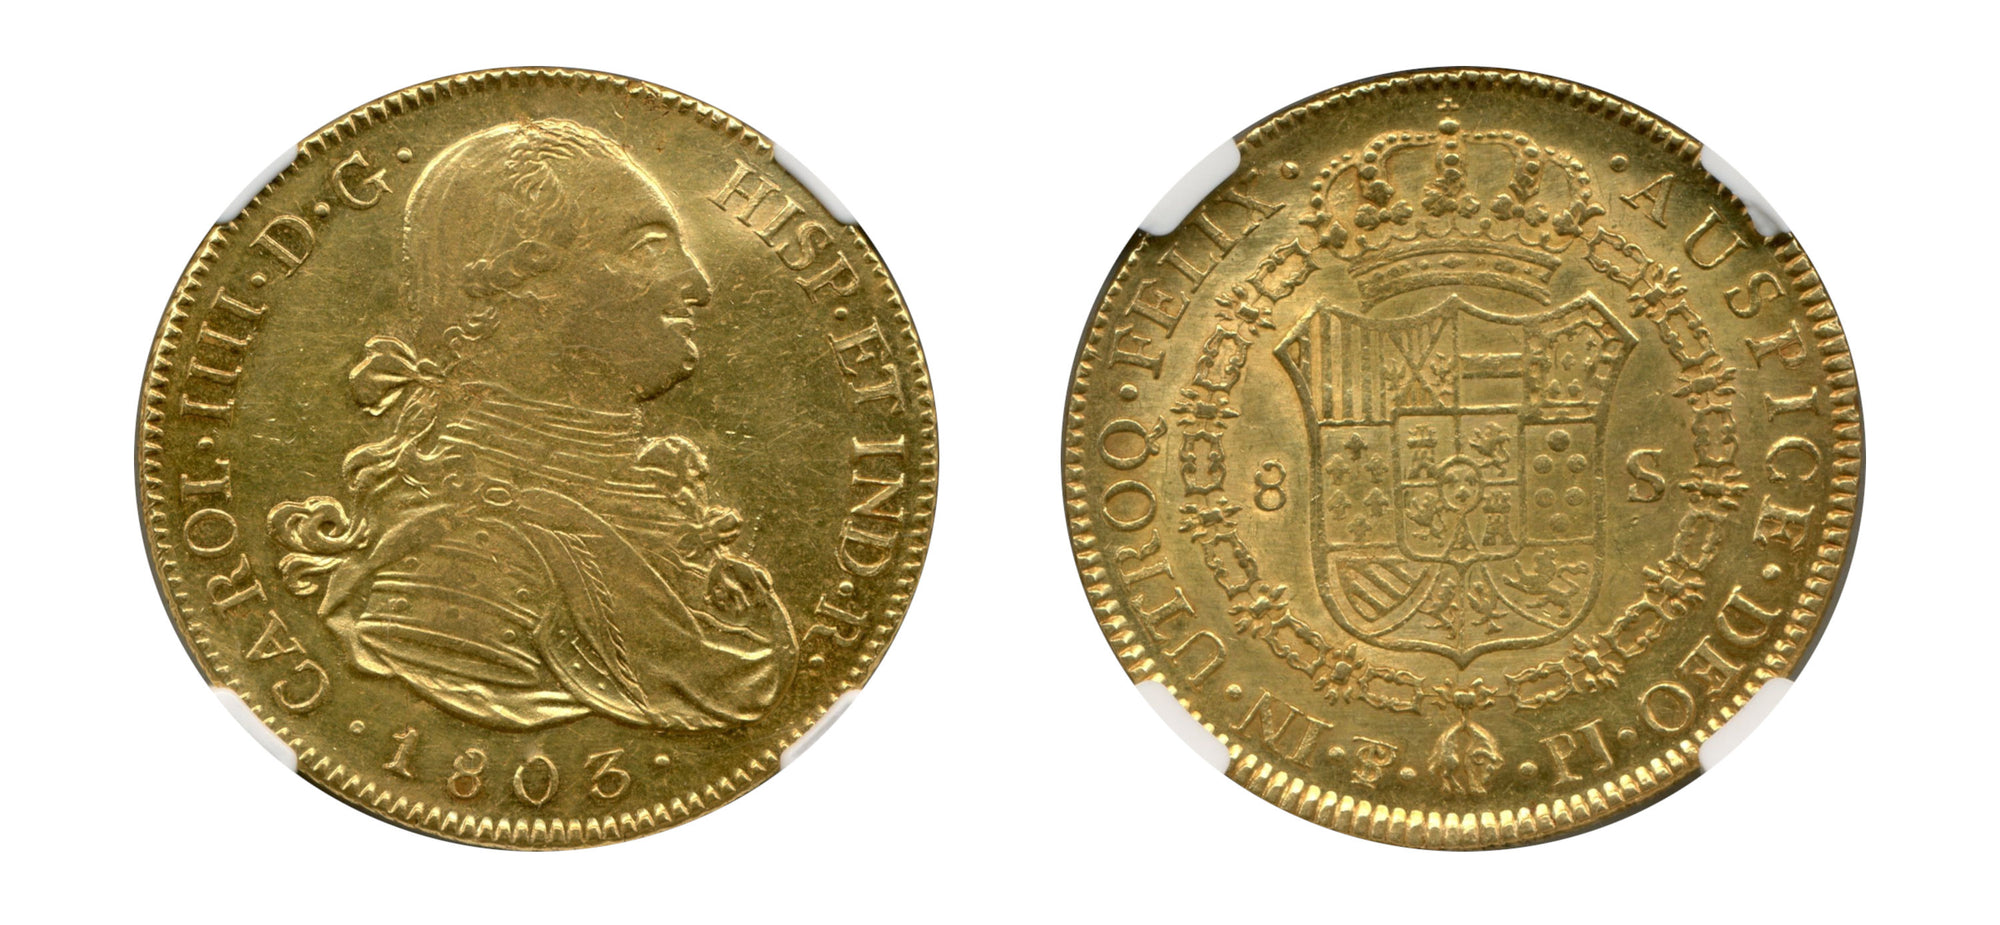 1803-Bolivia (Potosi) Gold 8 Escudos NGC AU 55 - Hard Asset Management, Inc